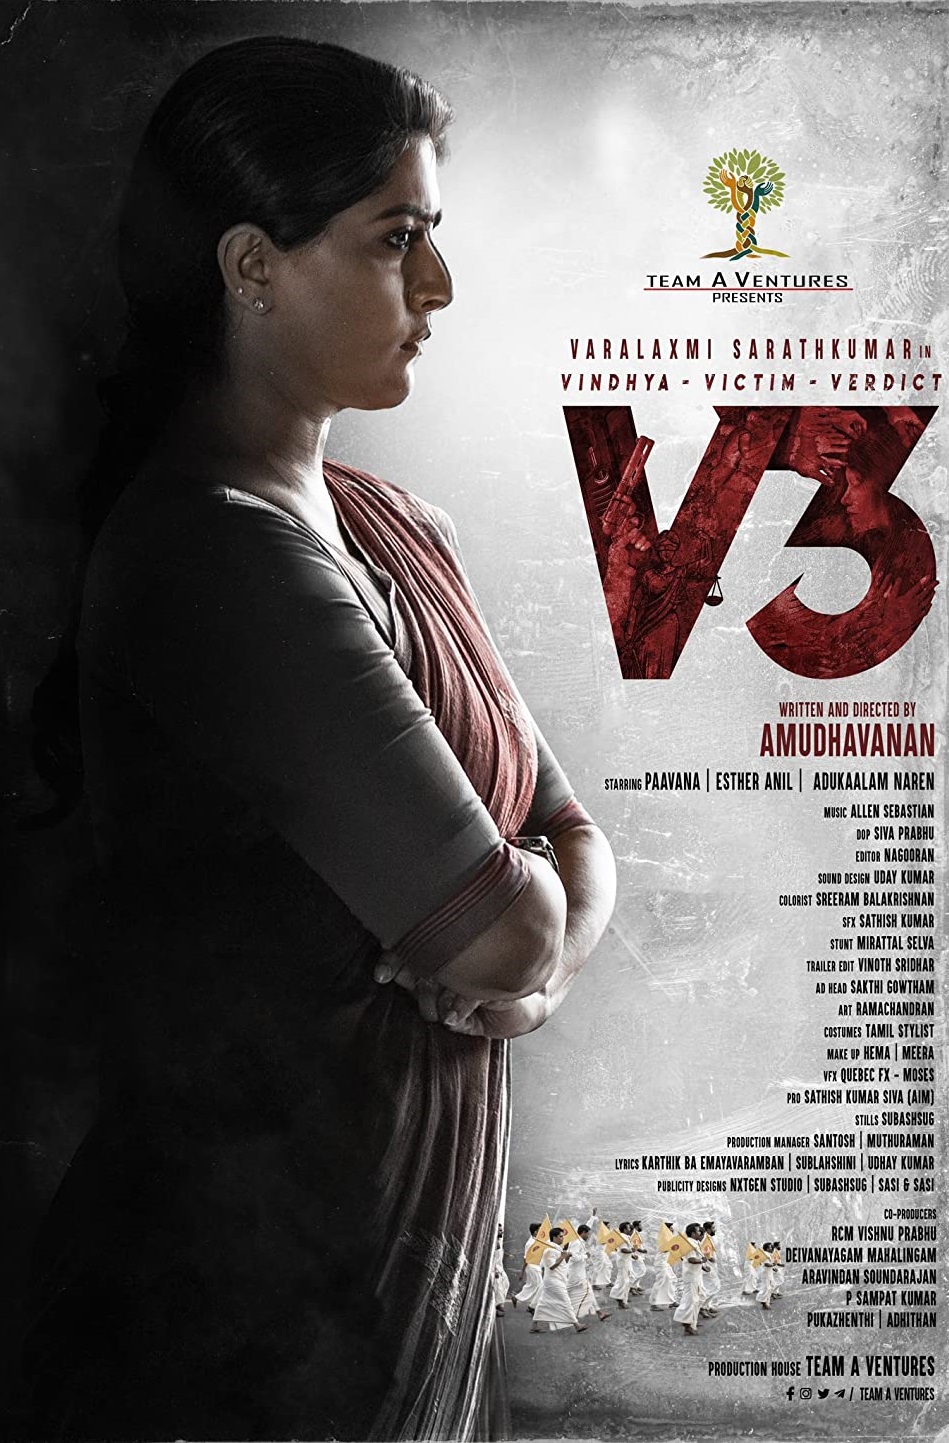 Vindhya Victim Verdict - V3 2023 Tamil Drama Movie Online